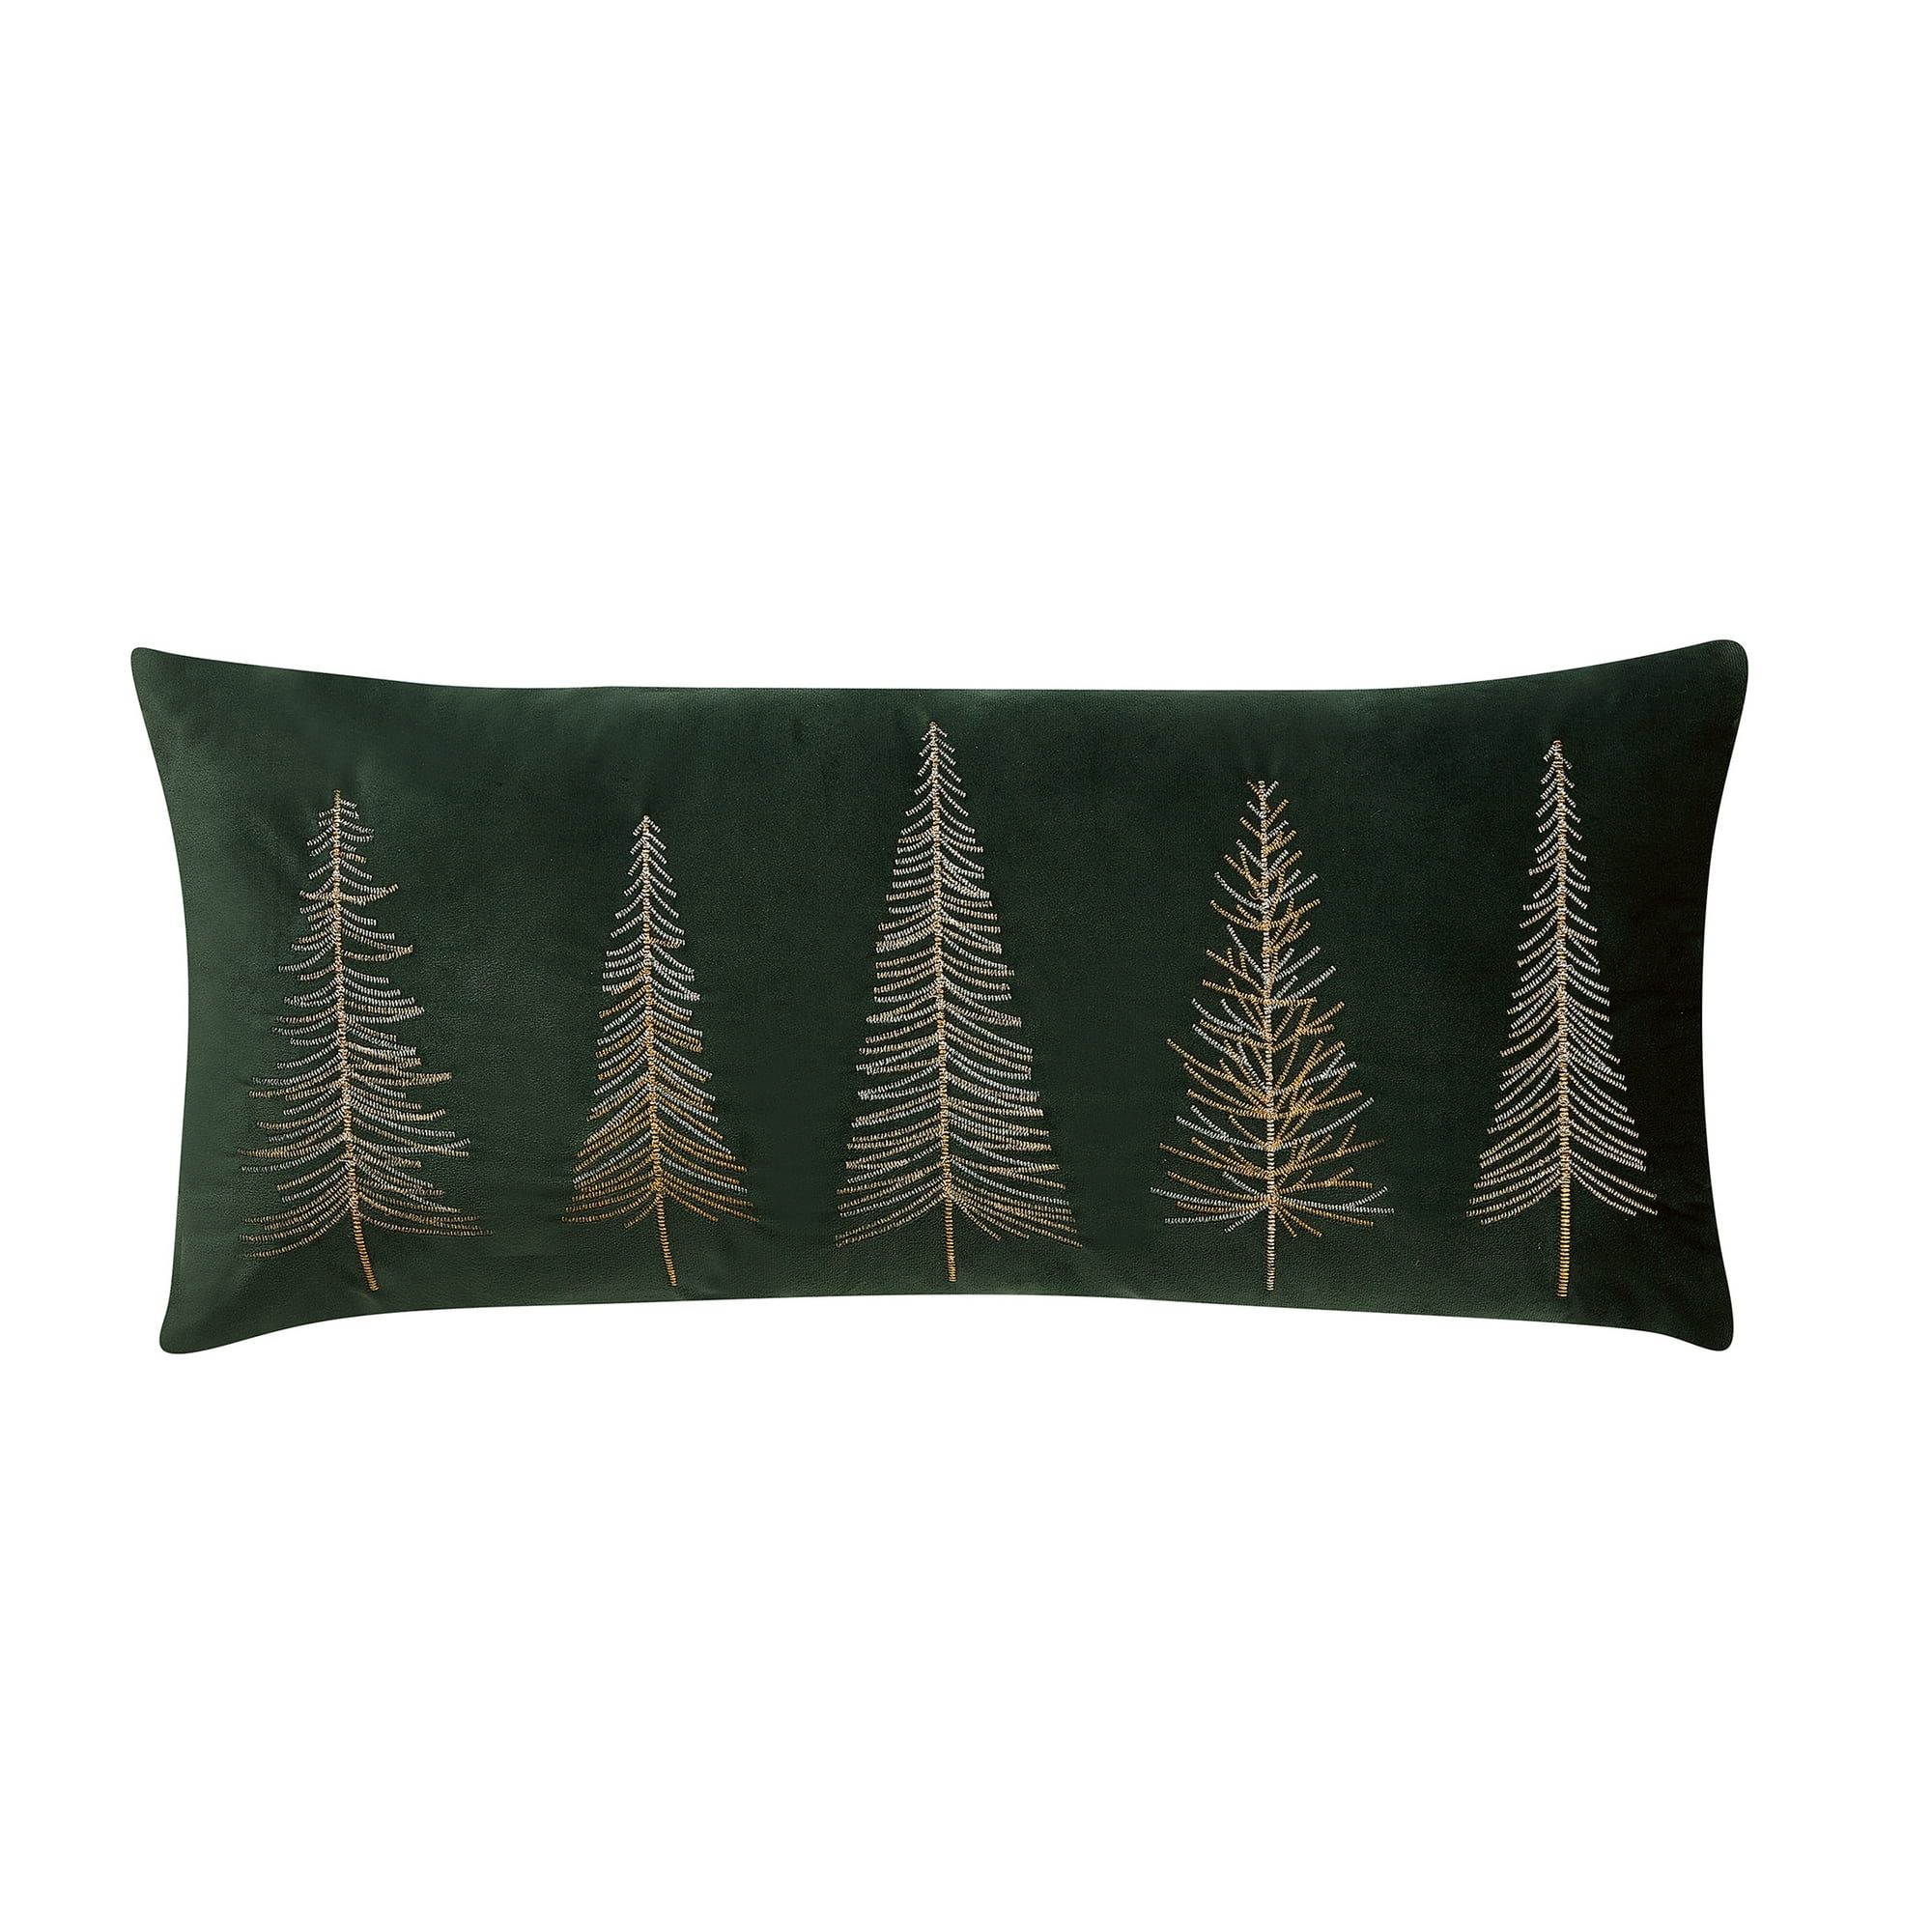 My Texas House Holiday Tree 12" x 28" Green Velvet Decorative Pillow Cover | Walmart (US)